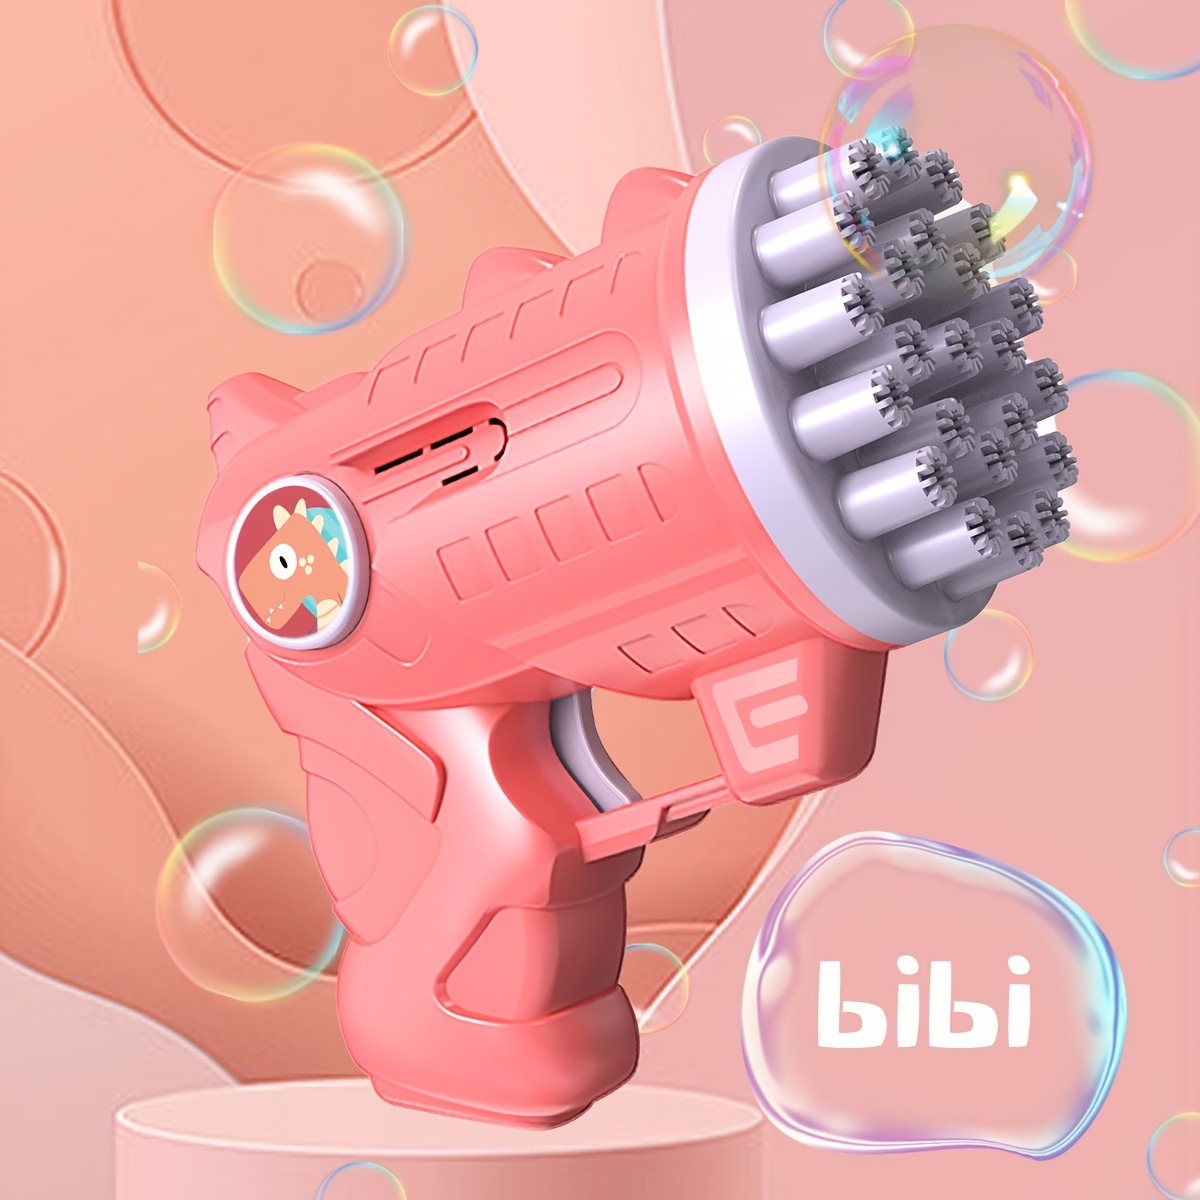  Rocket Bubble Gun Bubble Machine, 69 Holes Bubble Machine Gun  with Lights and Bubble Solution, Bubble Machine Blaster for Kids Adults  Birthday Wedding Party - Pink Bubble Blower : Toys & Games